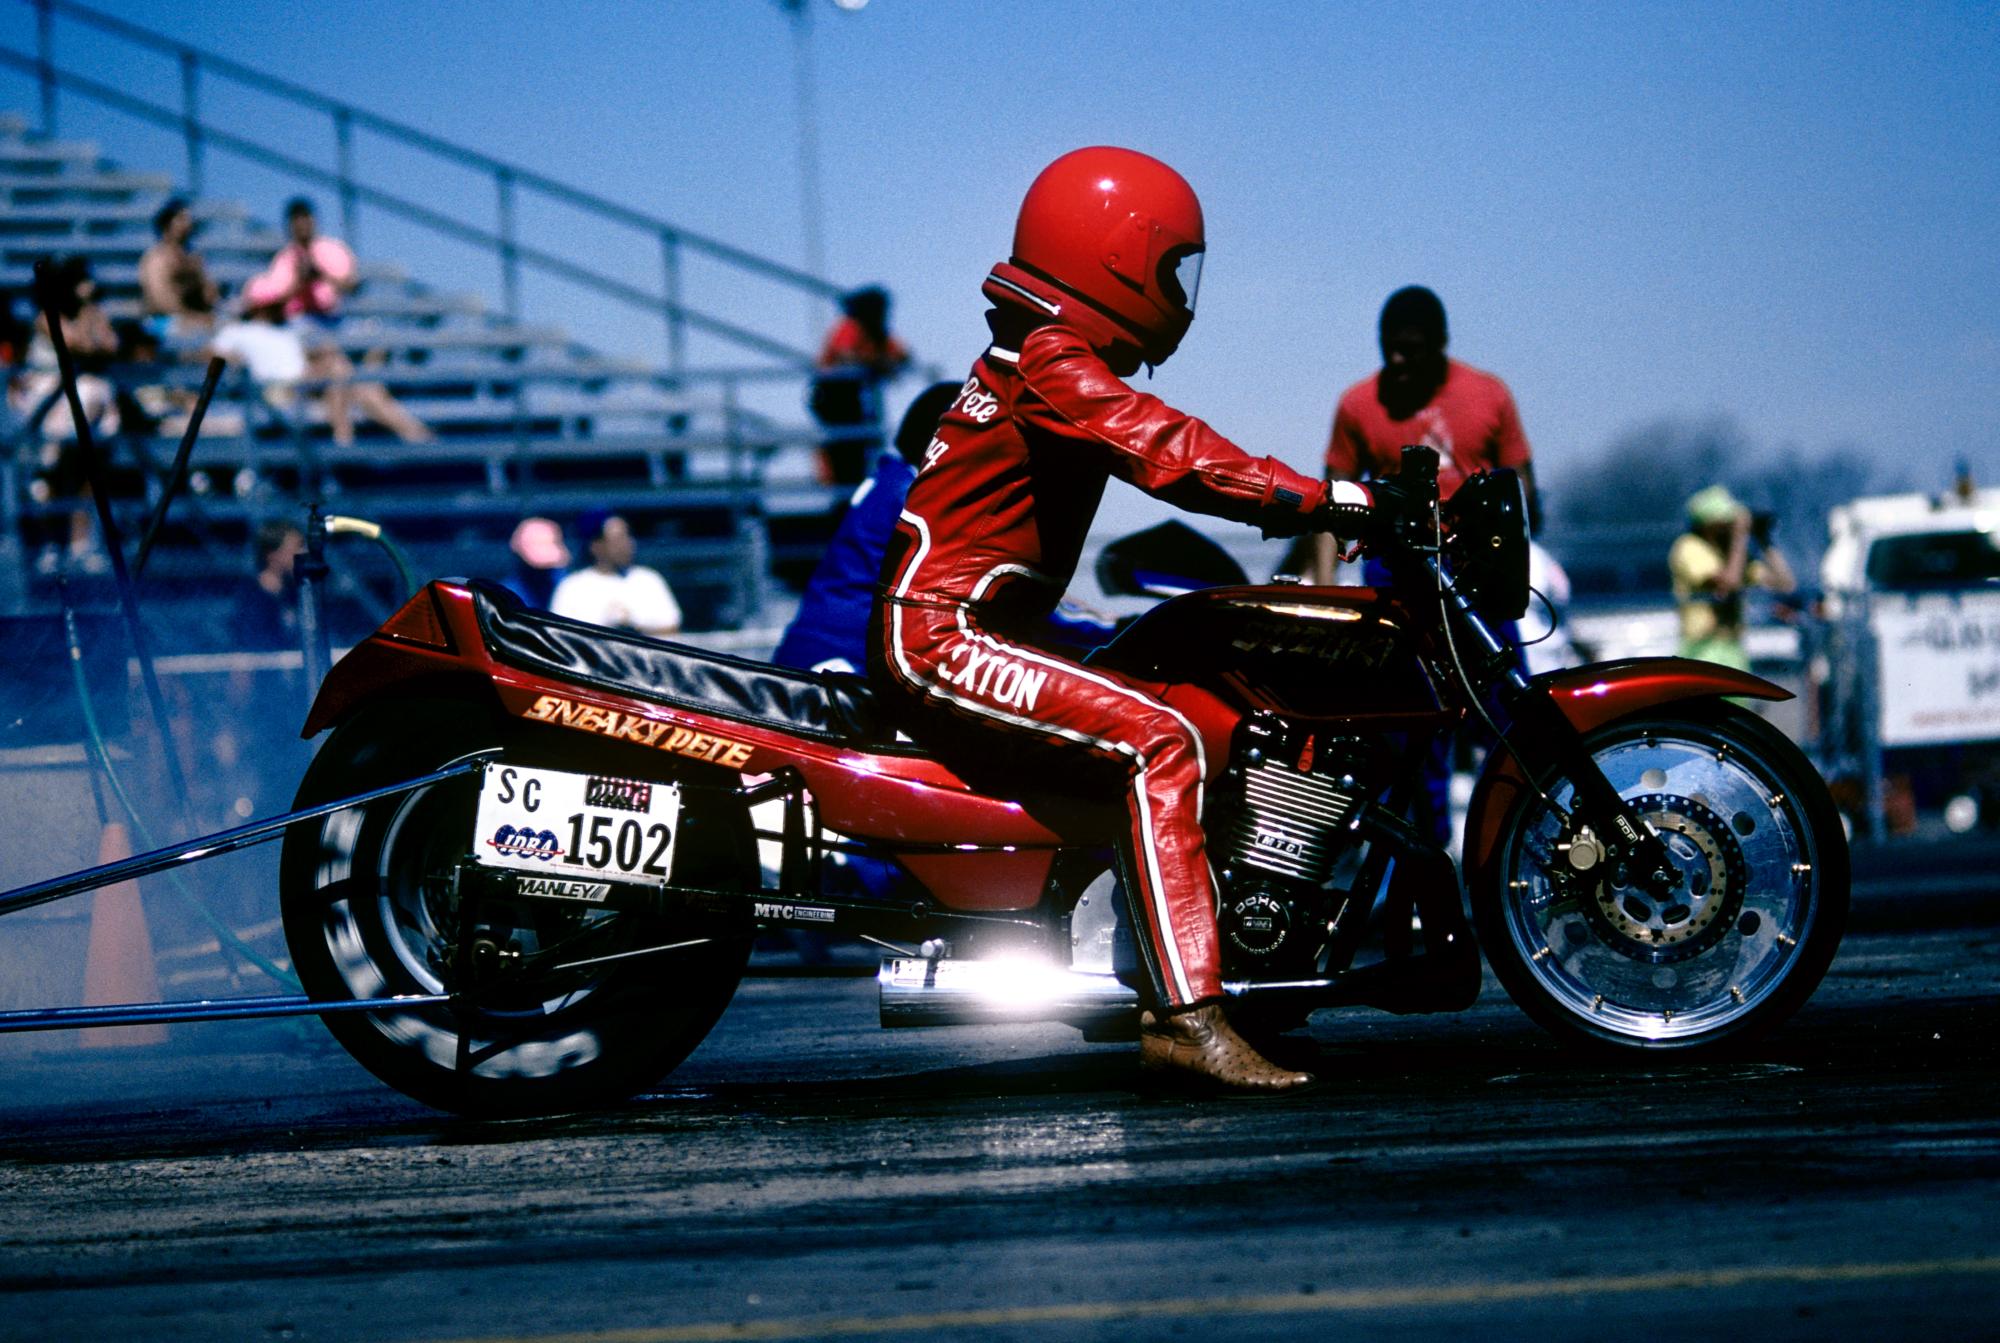 Texas Motor Drag Racing (1991) - Warming Up #2